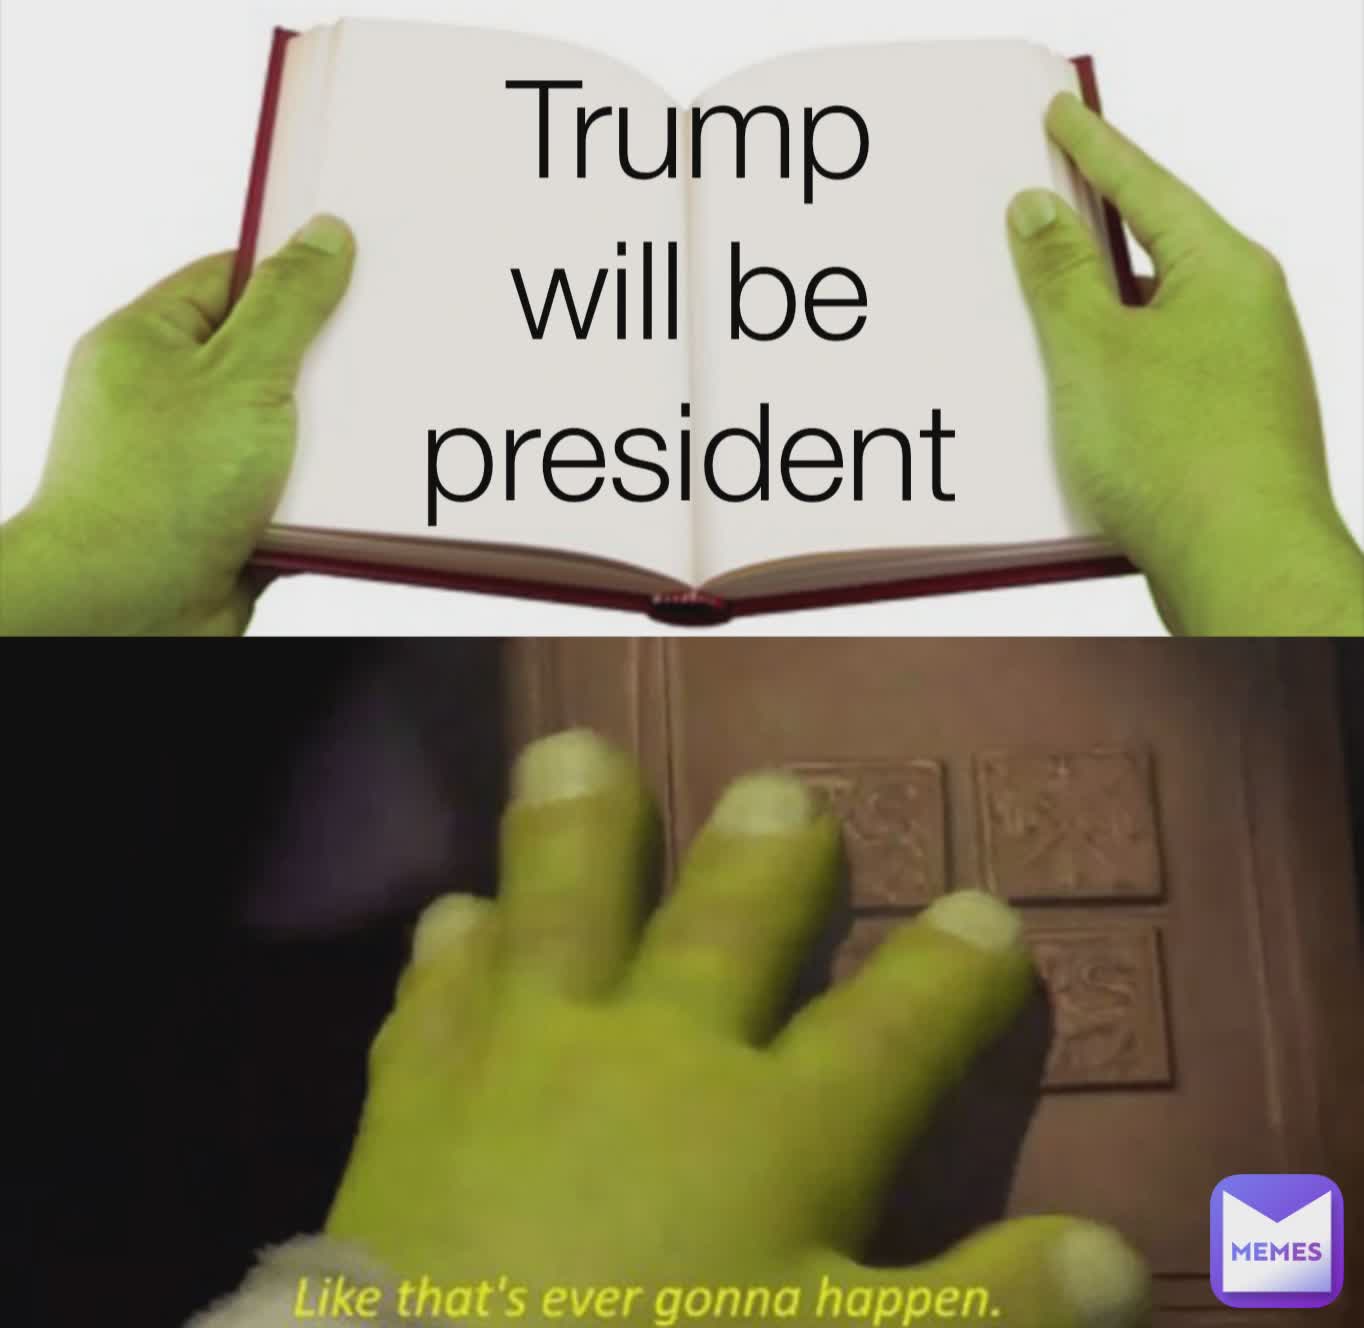 Trump
will be
president